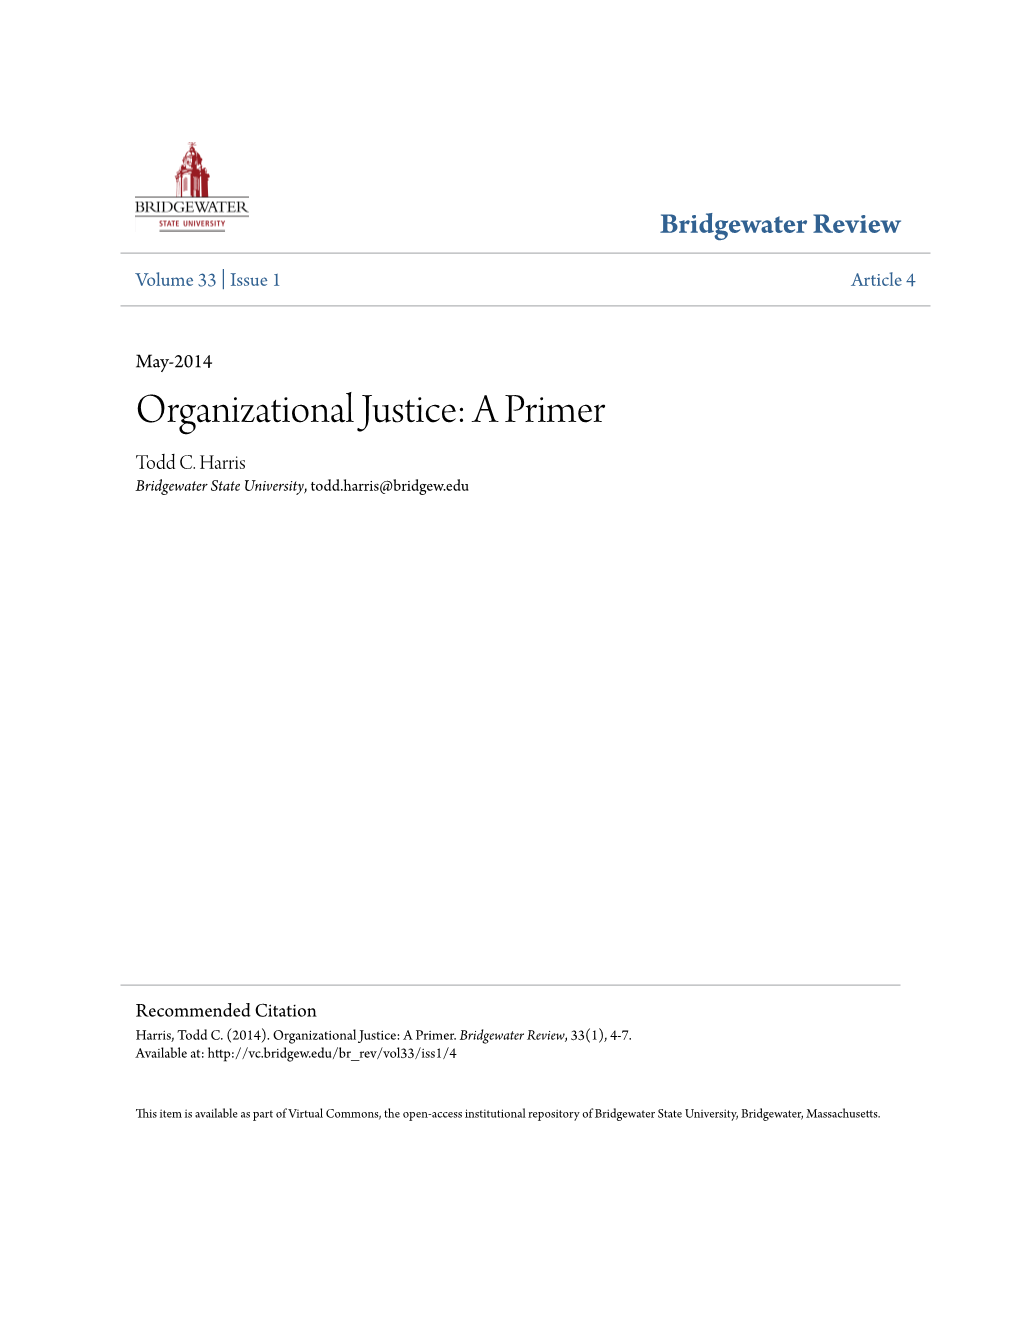 Organizational Justice: a Primer Todd C